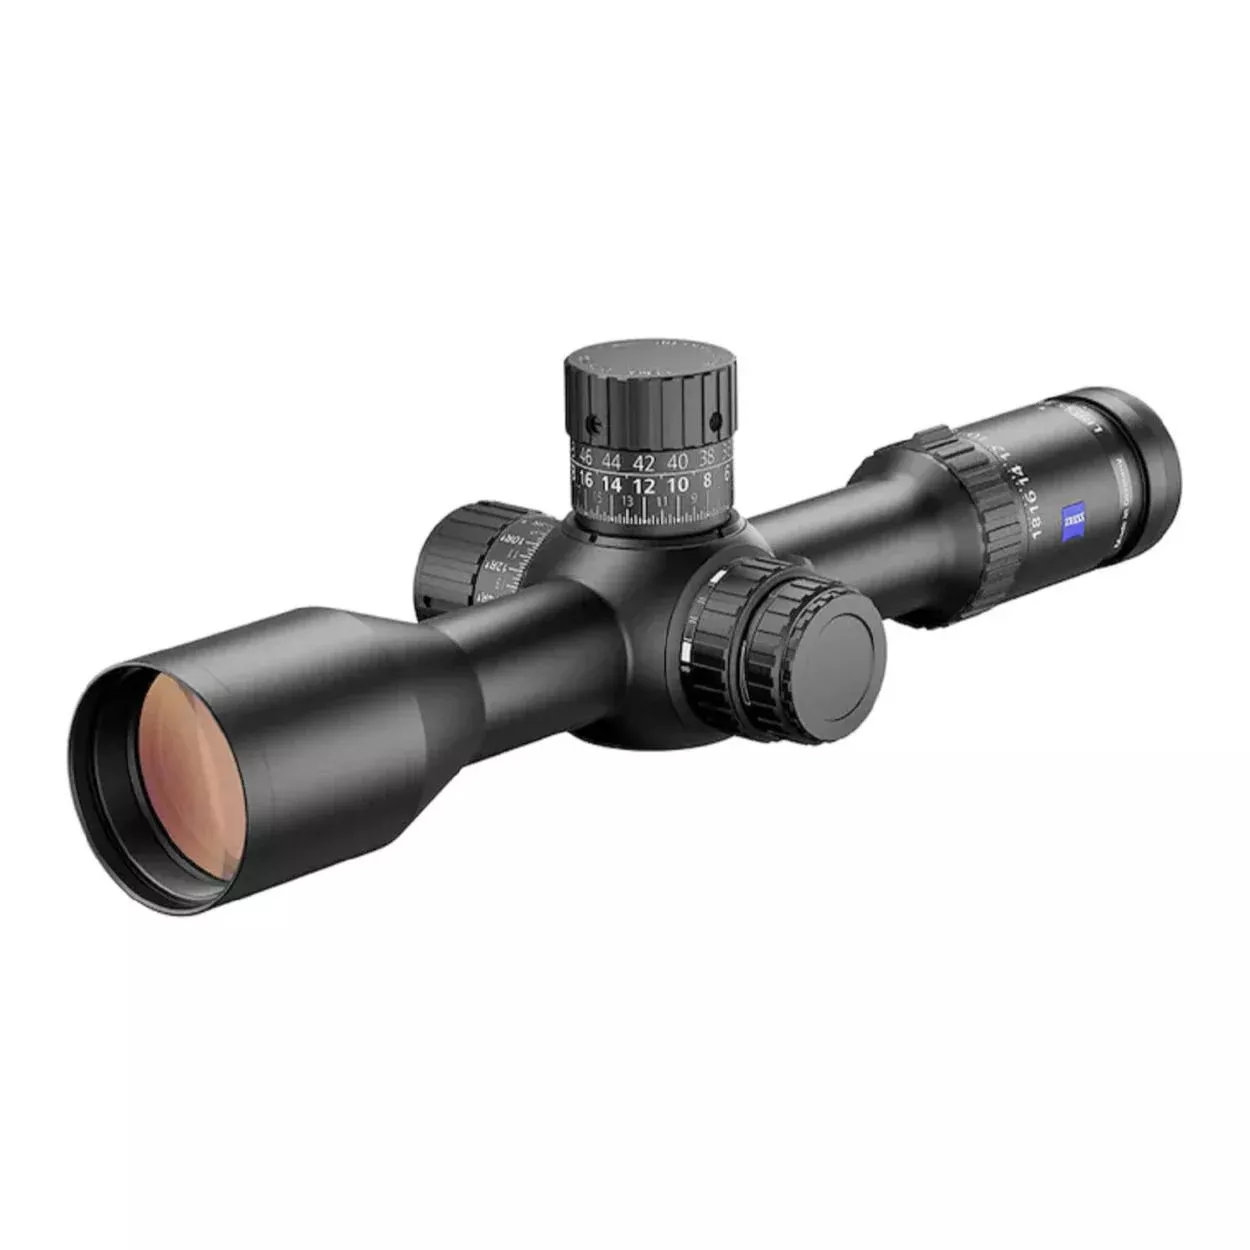 Zeiss LRP S5 ZF 3.6-18x50 Long Range FFP Riflescope (.25 MOA ZF-MOAi Reticle) 140 MOA - $2999.99 w/code "500off" (Free S/H)